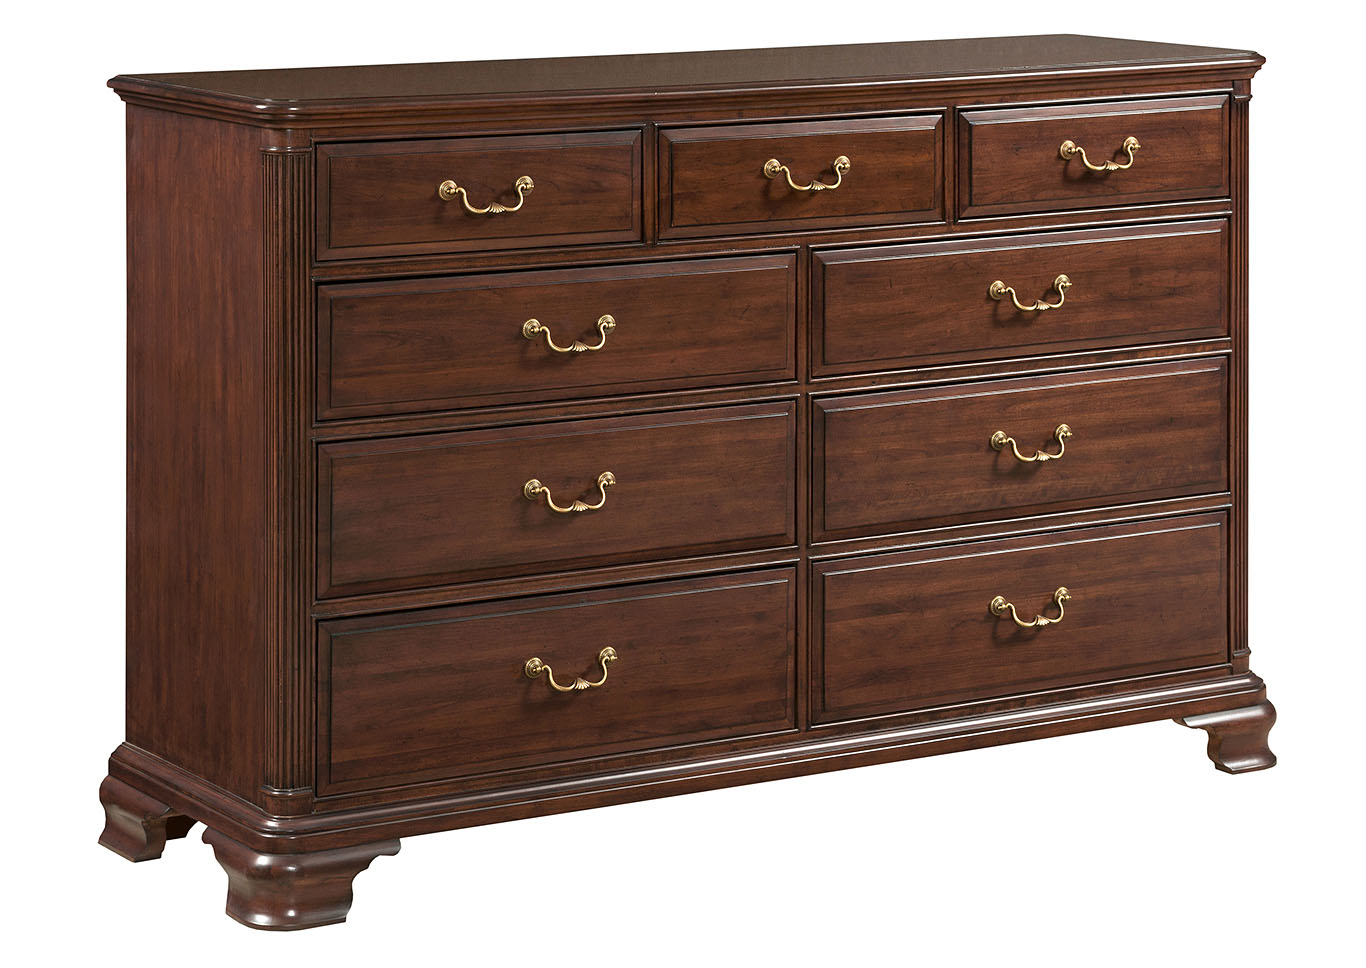 Hadleigh Classic Cherry Drawer Dresser,Kincaid